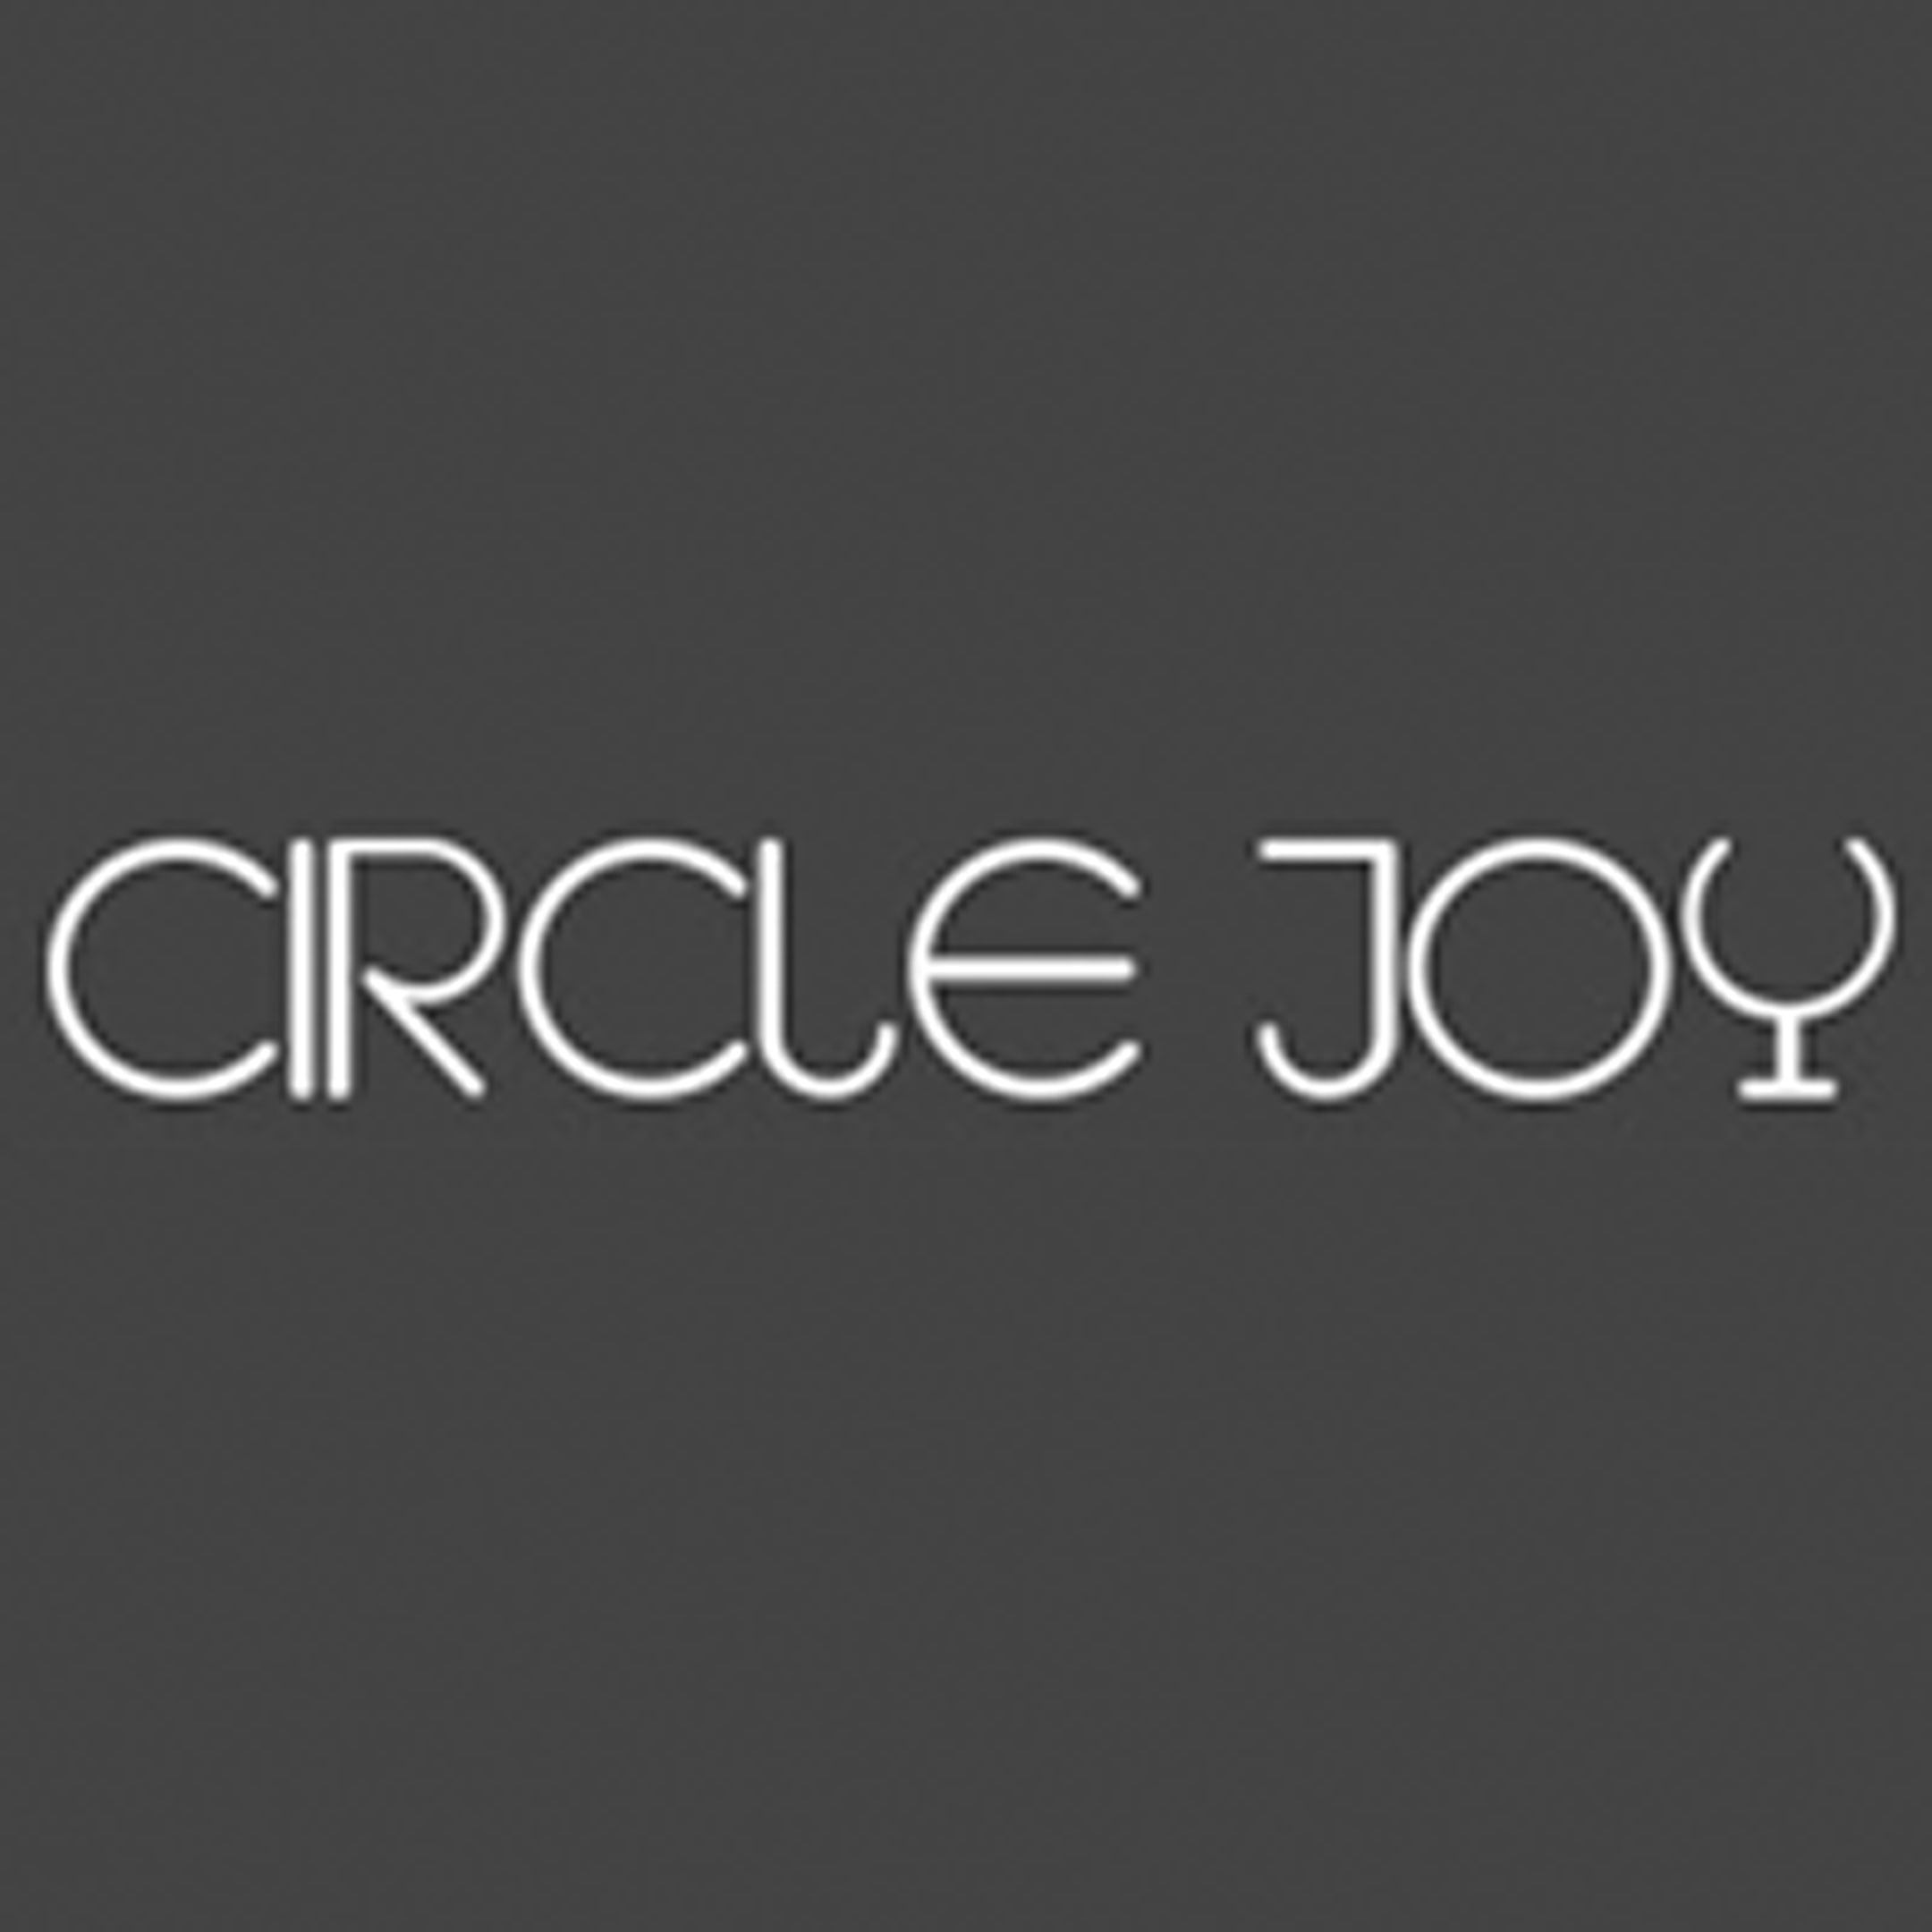 circlejoy logo min